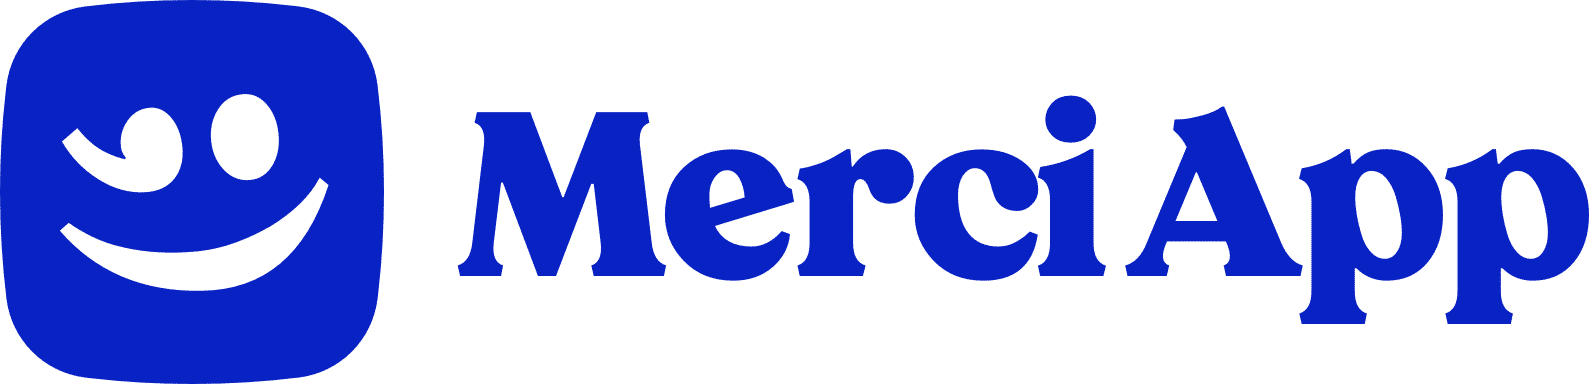 correcteur orthographique logiciel merciapp logo